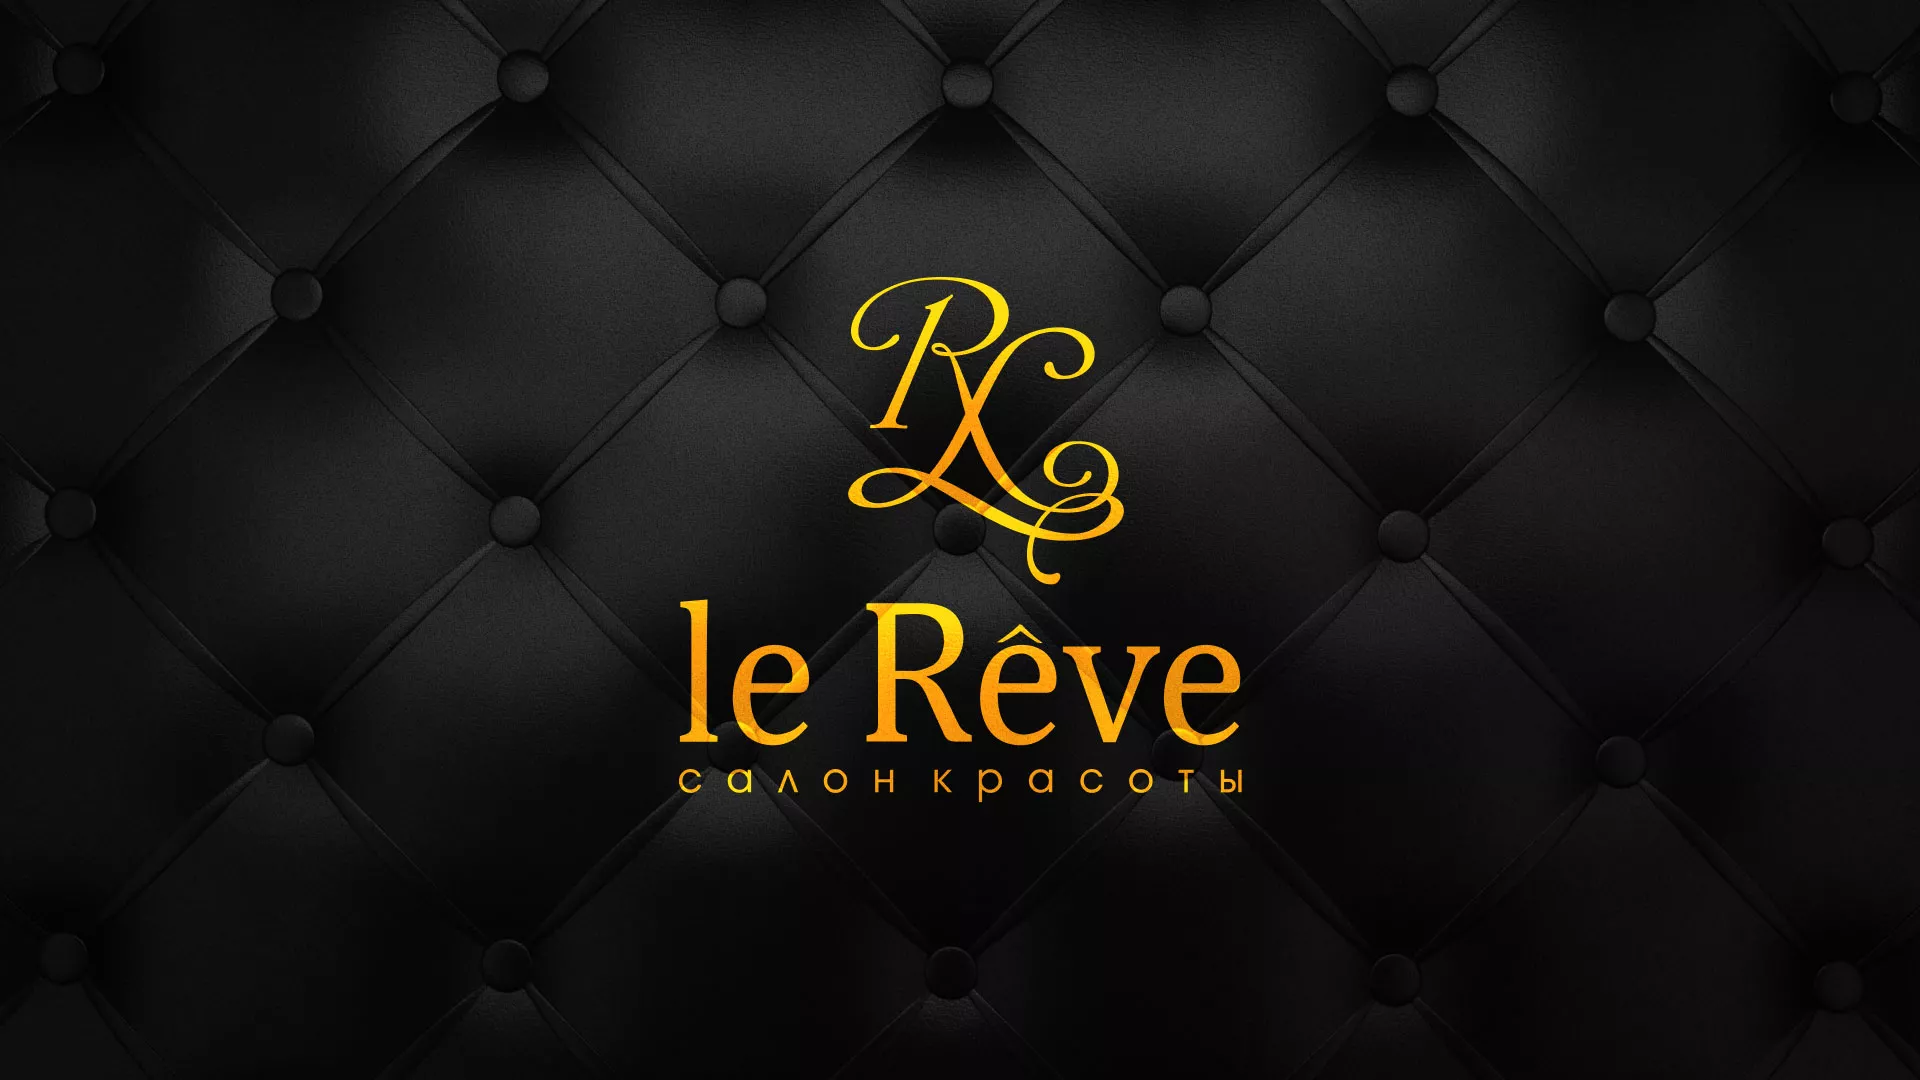 Разработка листовок для салона красоты «Le Reve» в Харабалях